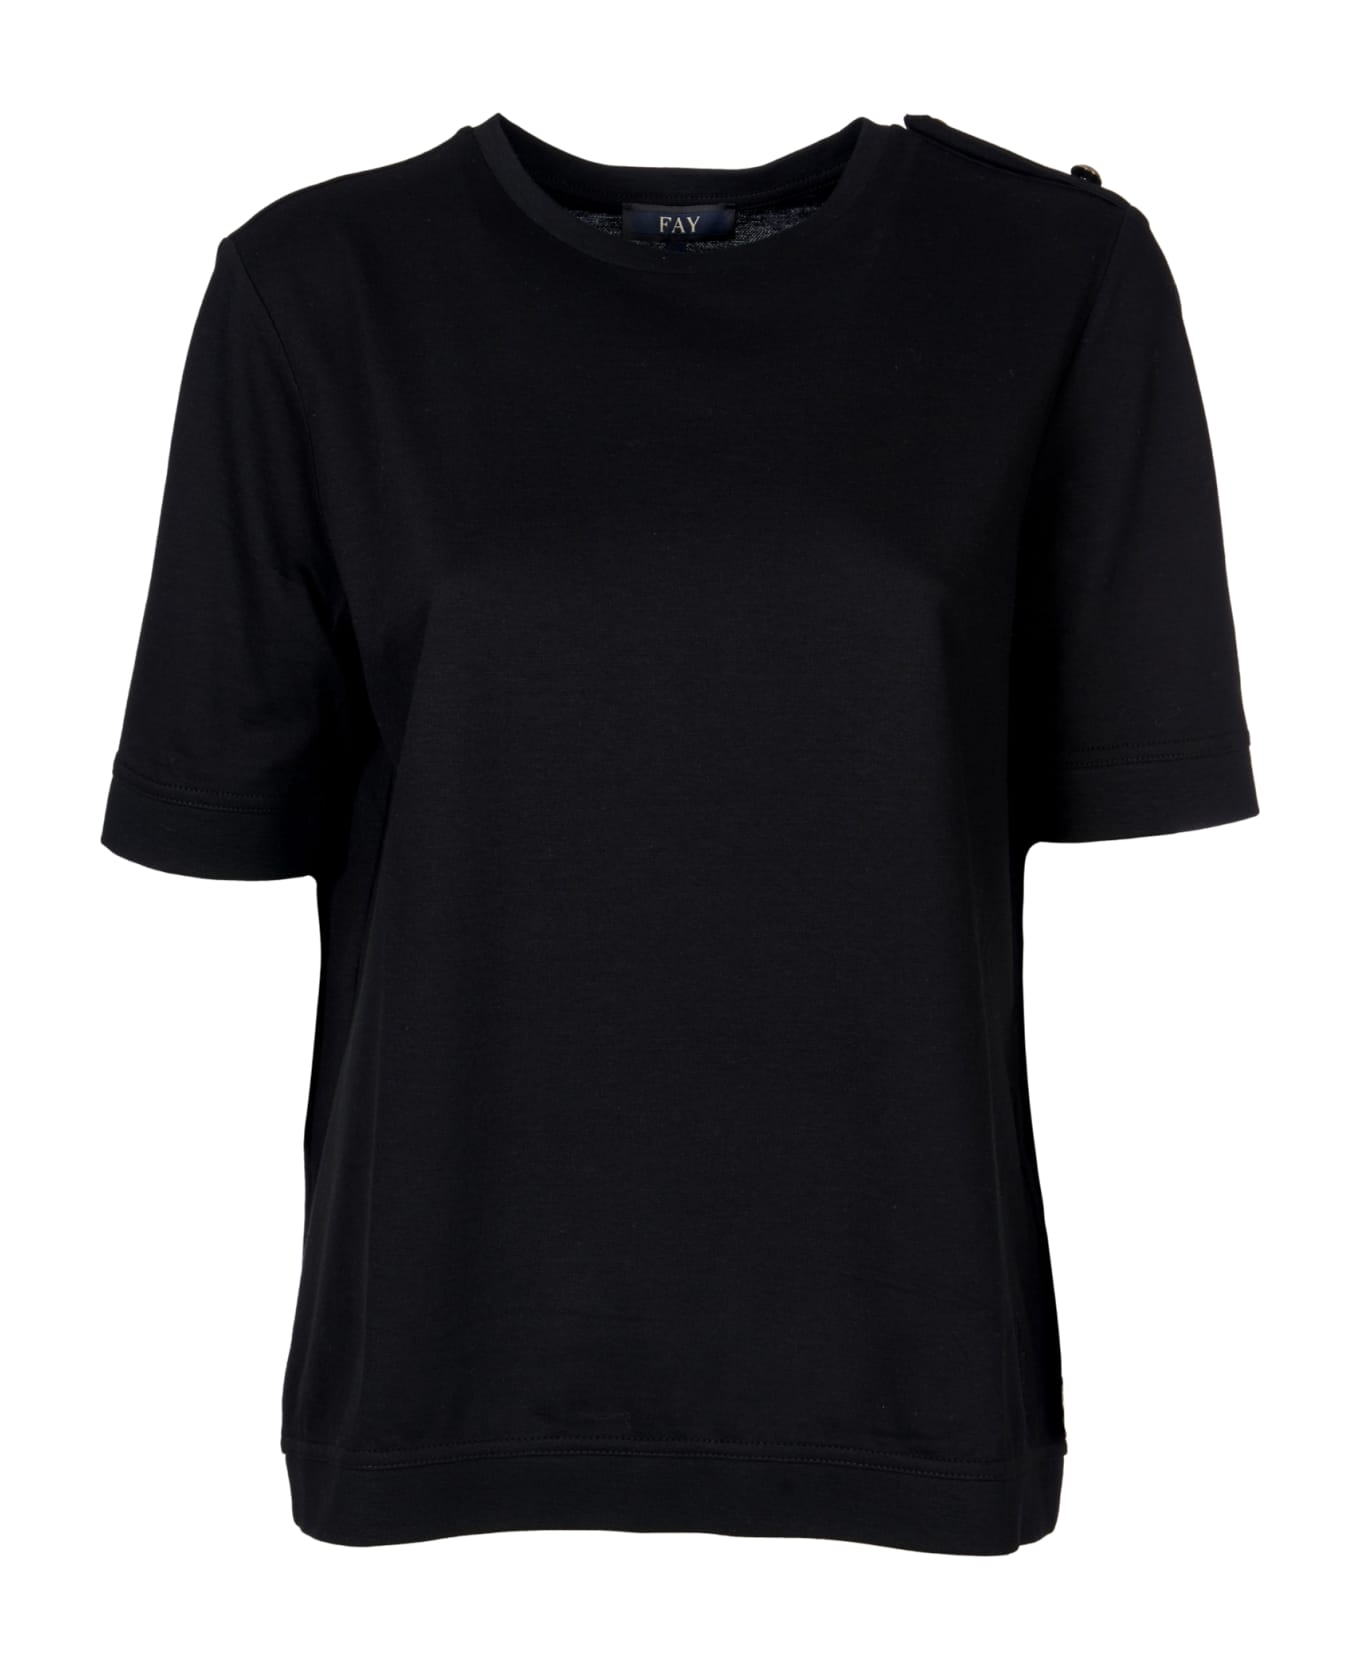 Fay T-shirt - Black